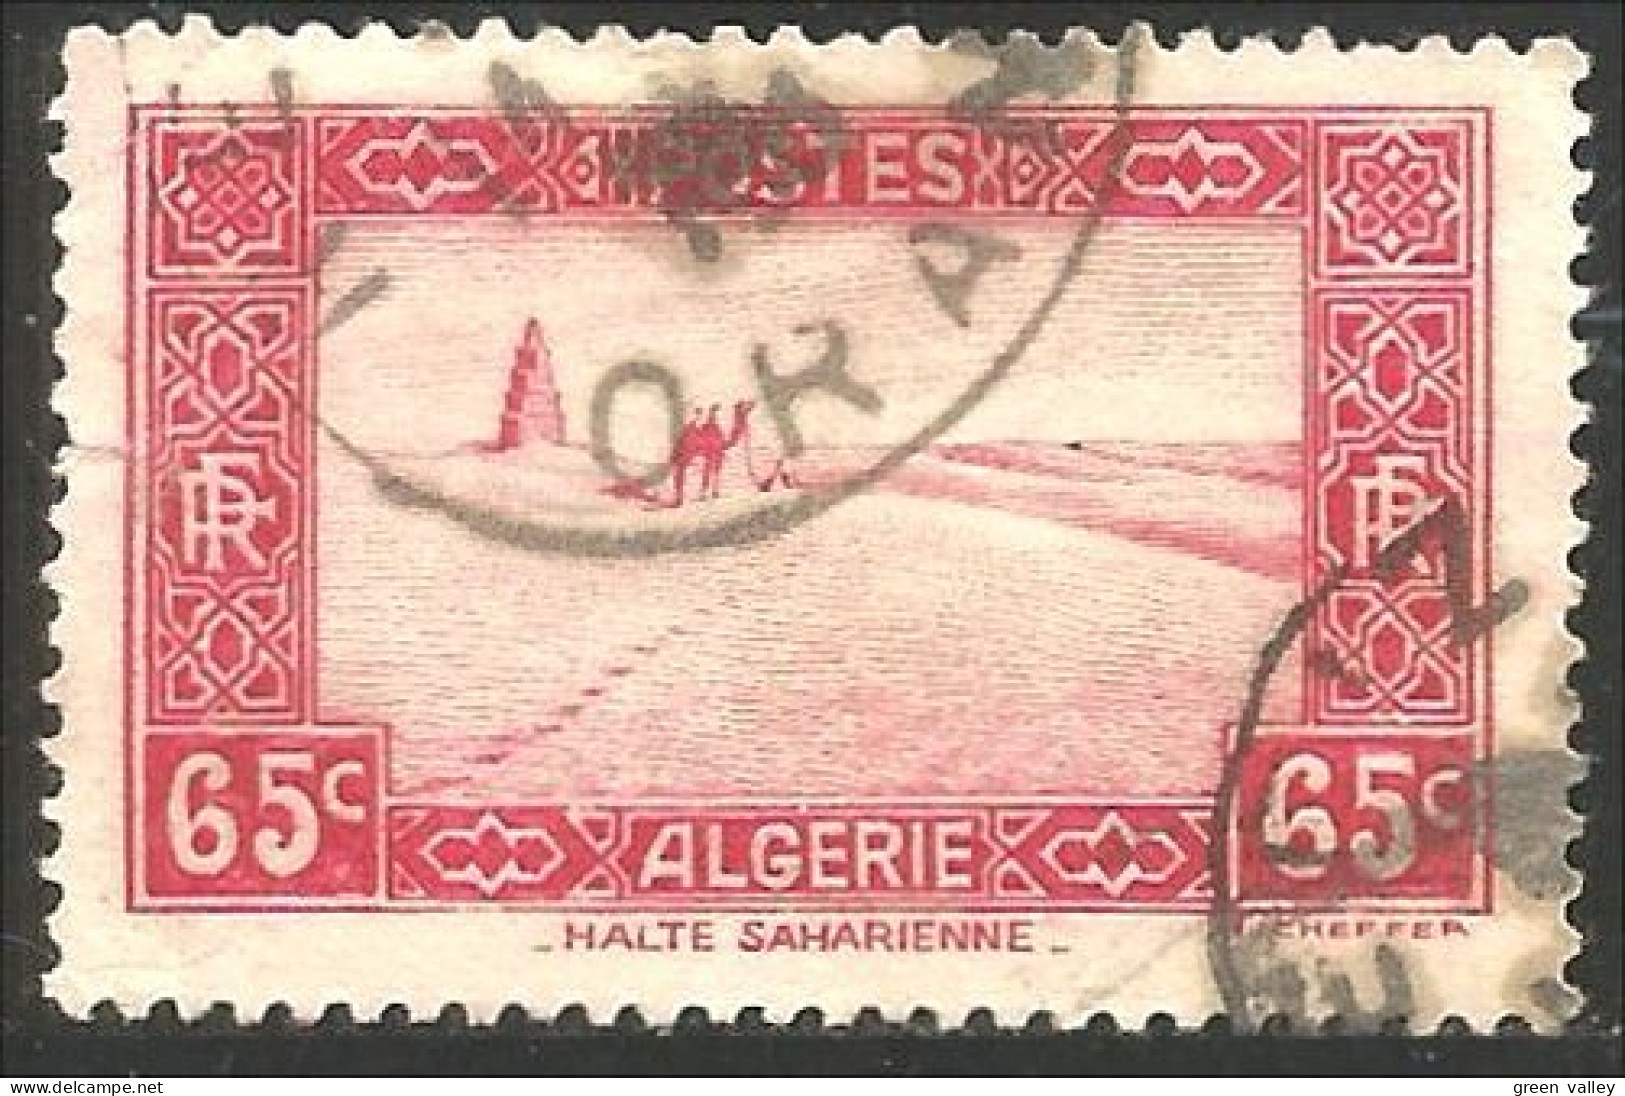 124 Algerie 65c Halte Saharienne Desert Sahara (ALG-181) - Usados